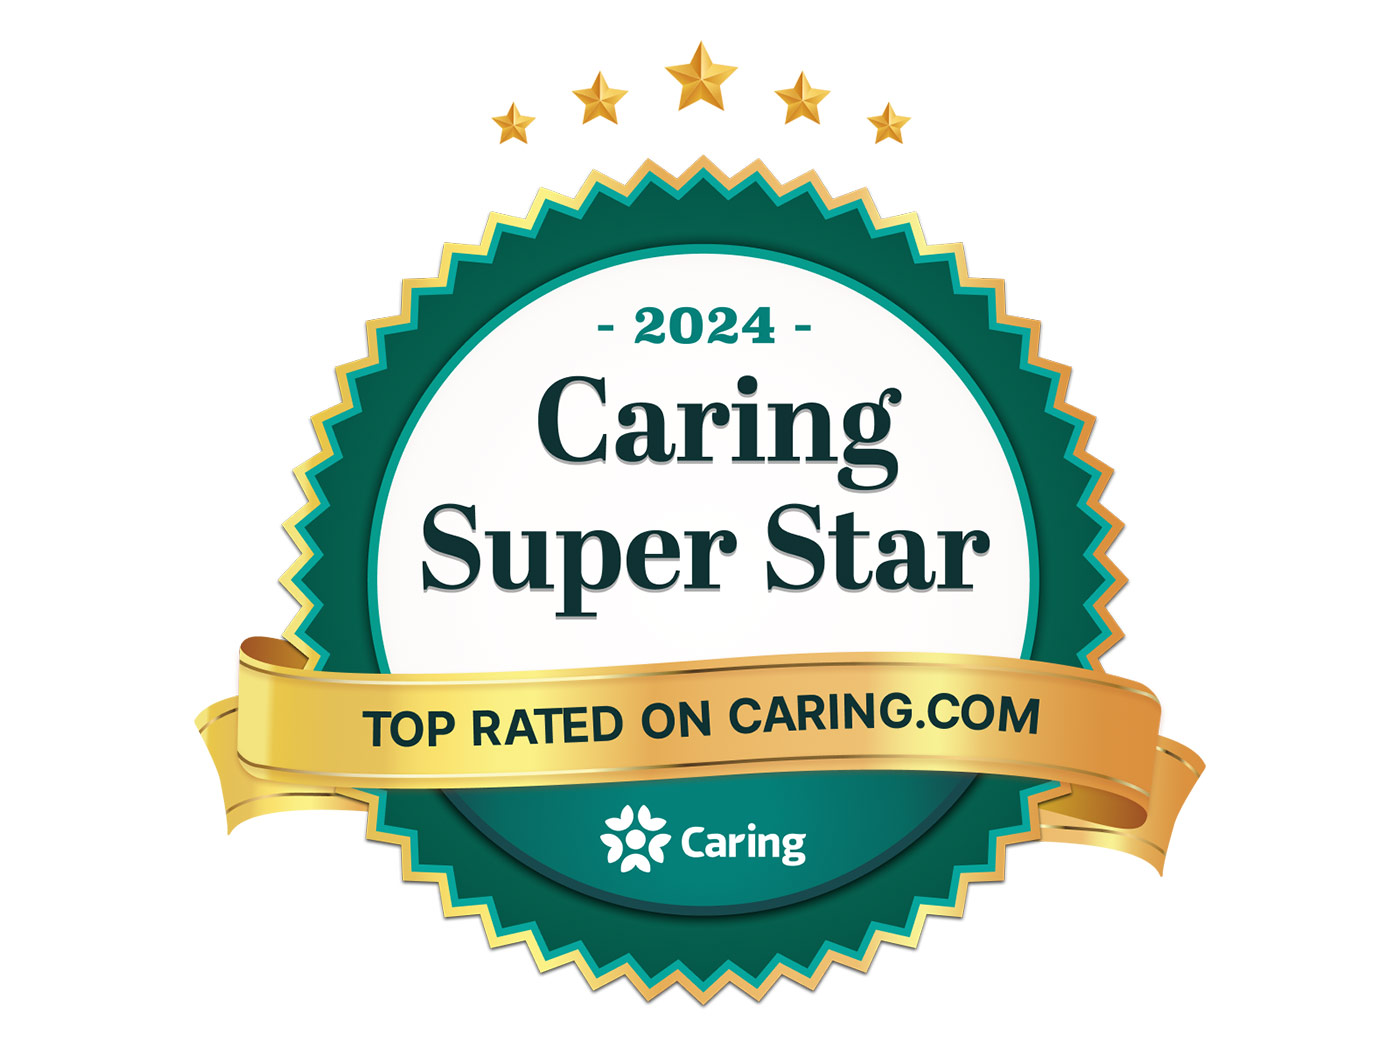 2024 Caring Super Star badge